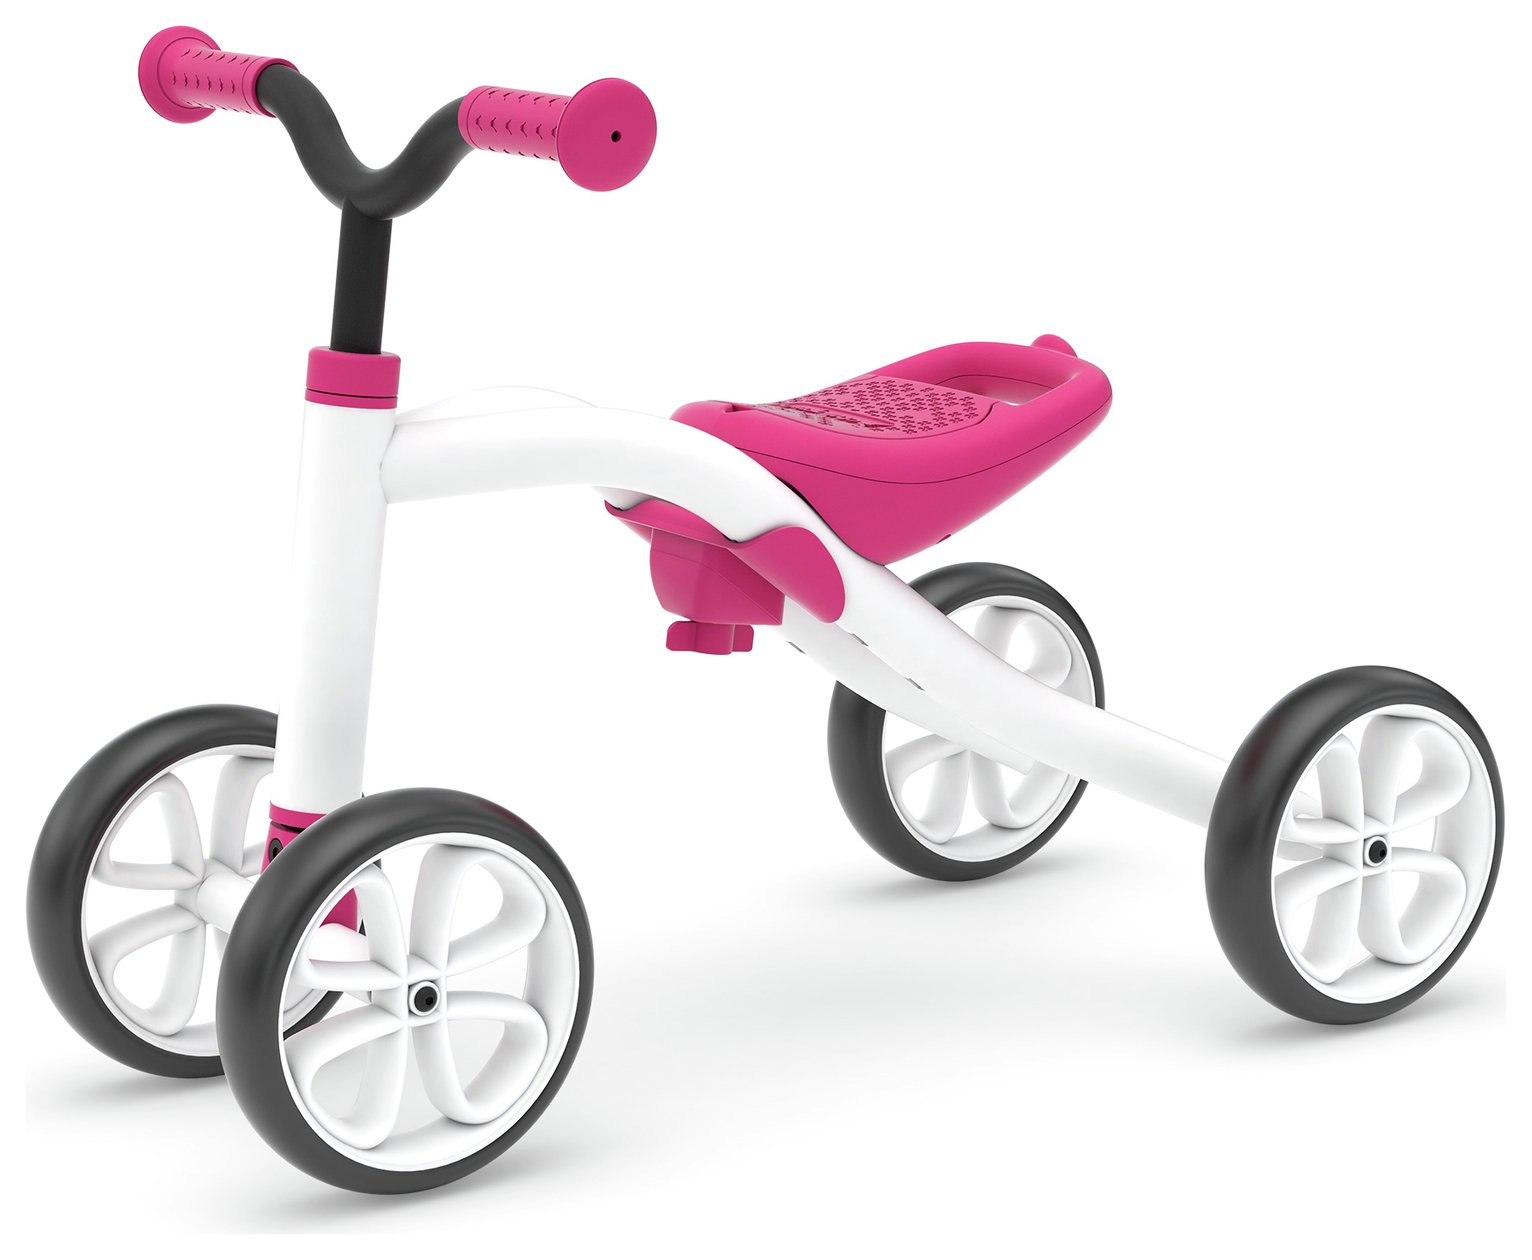 Chillafish Quadie Kids 4-Wheel Ride-On review